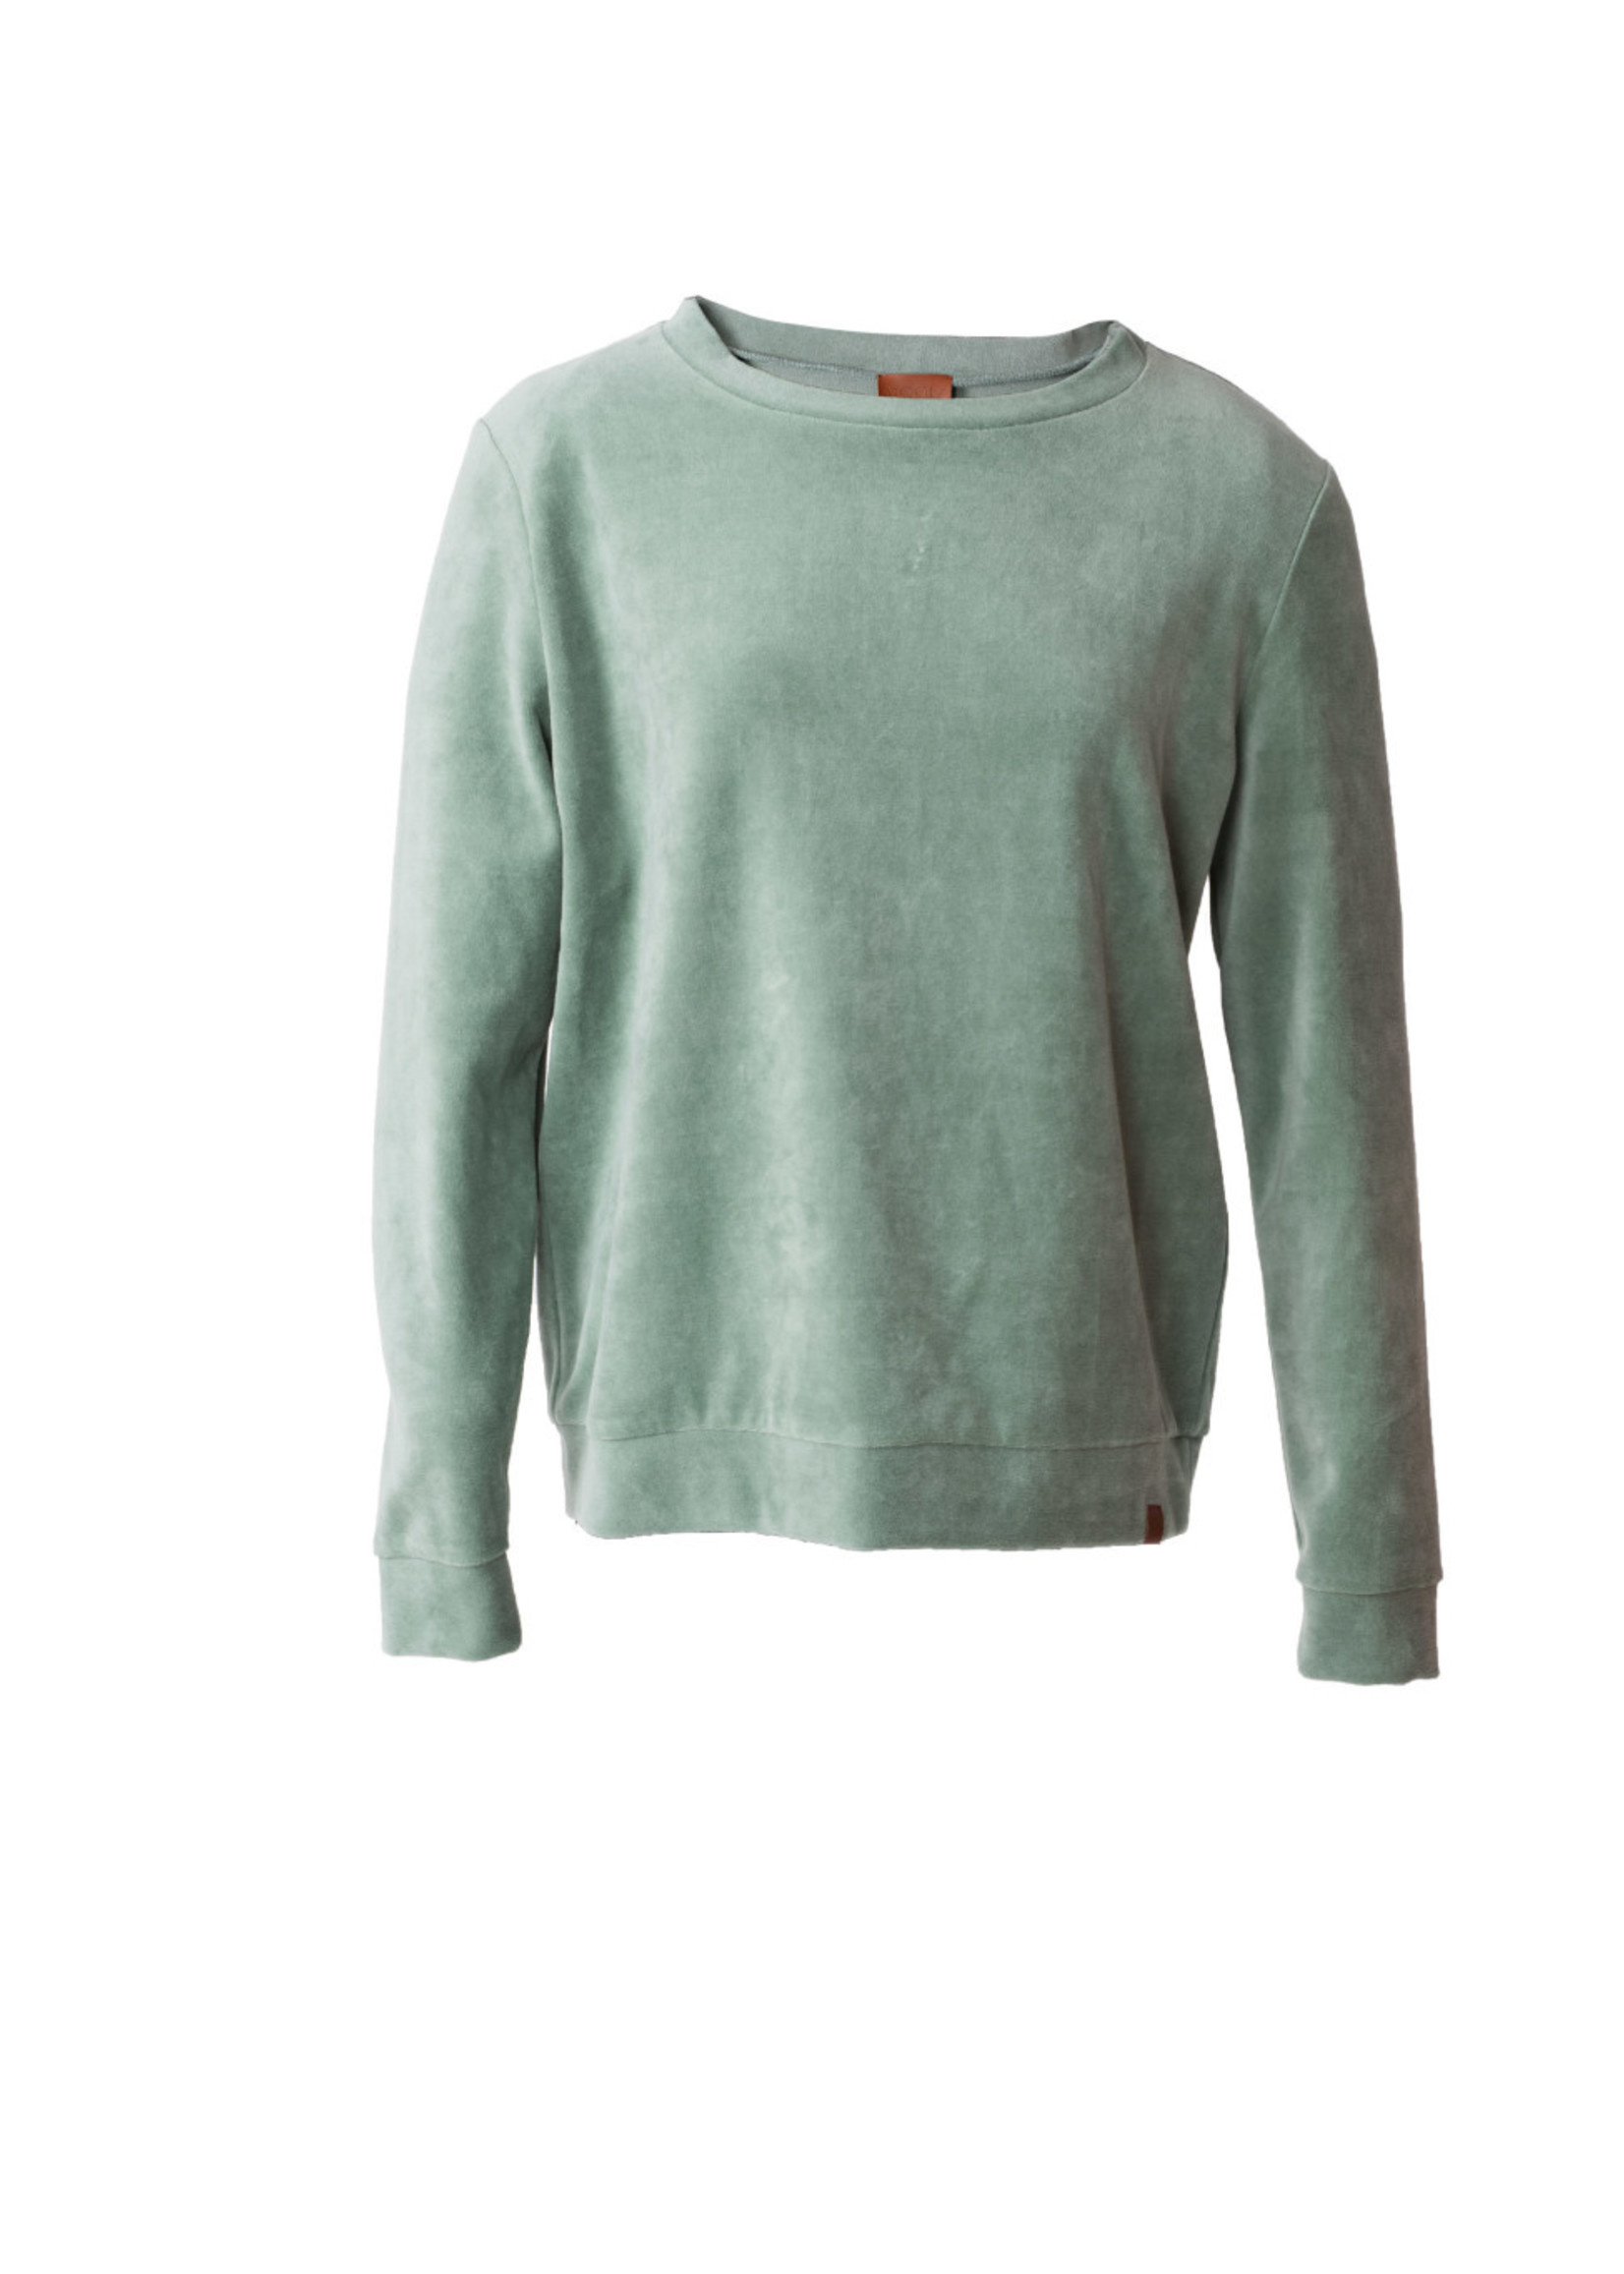 MOOI VROLIJK Sweater basic green  22087